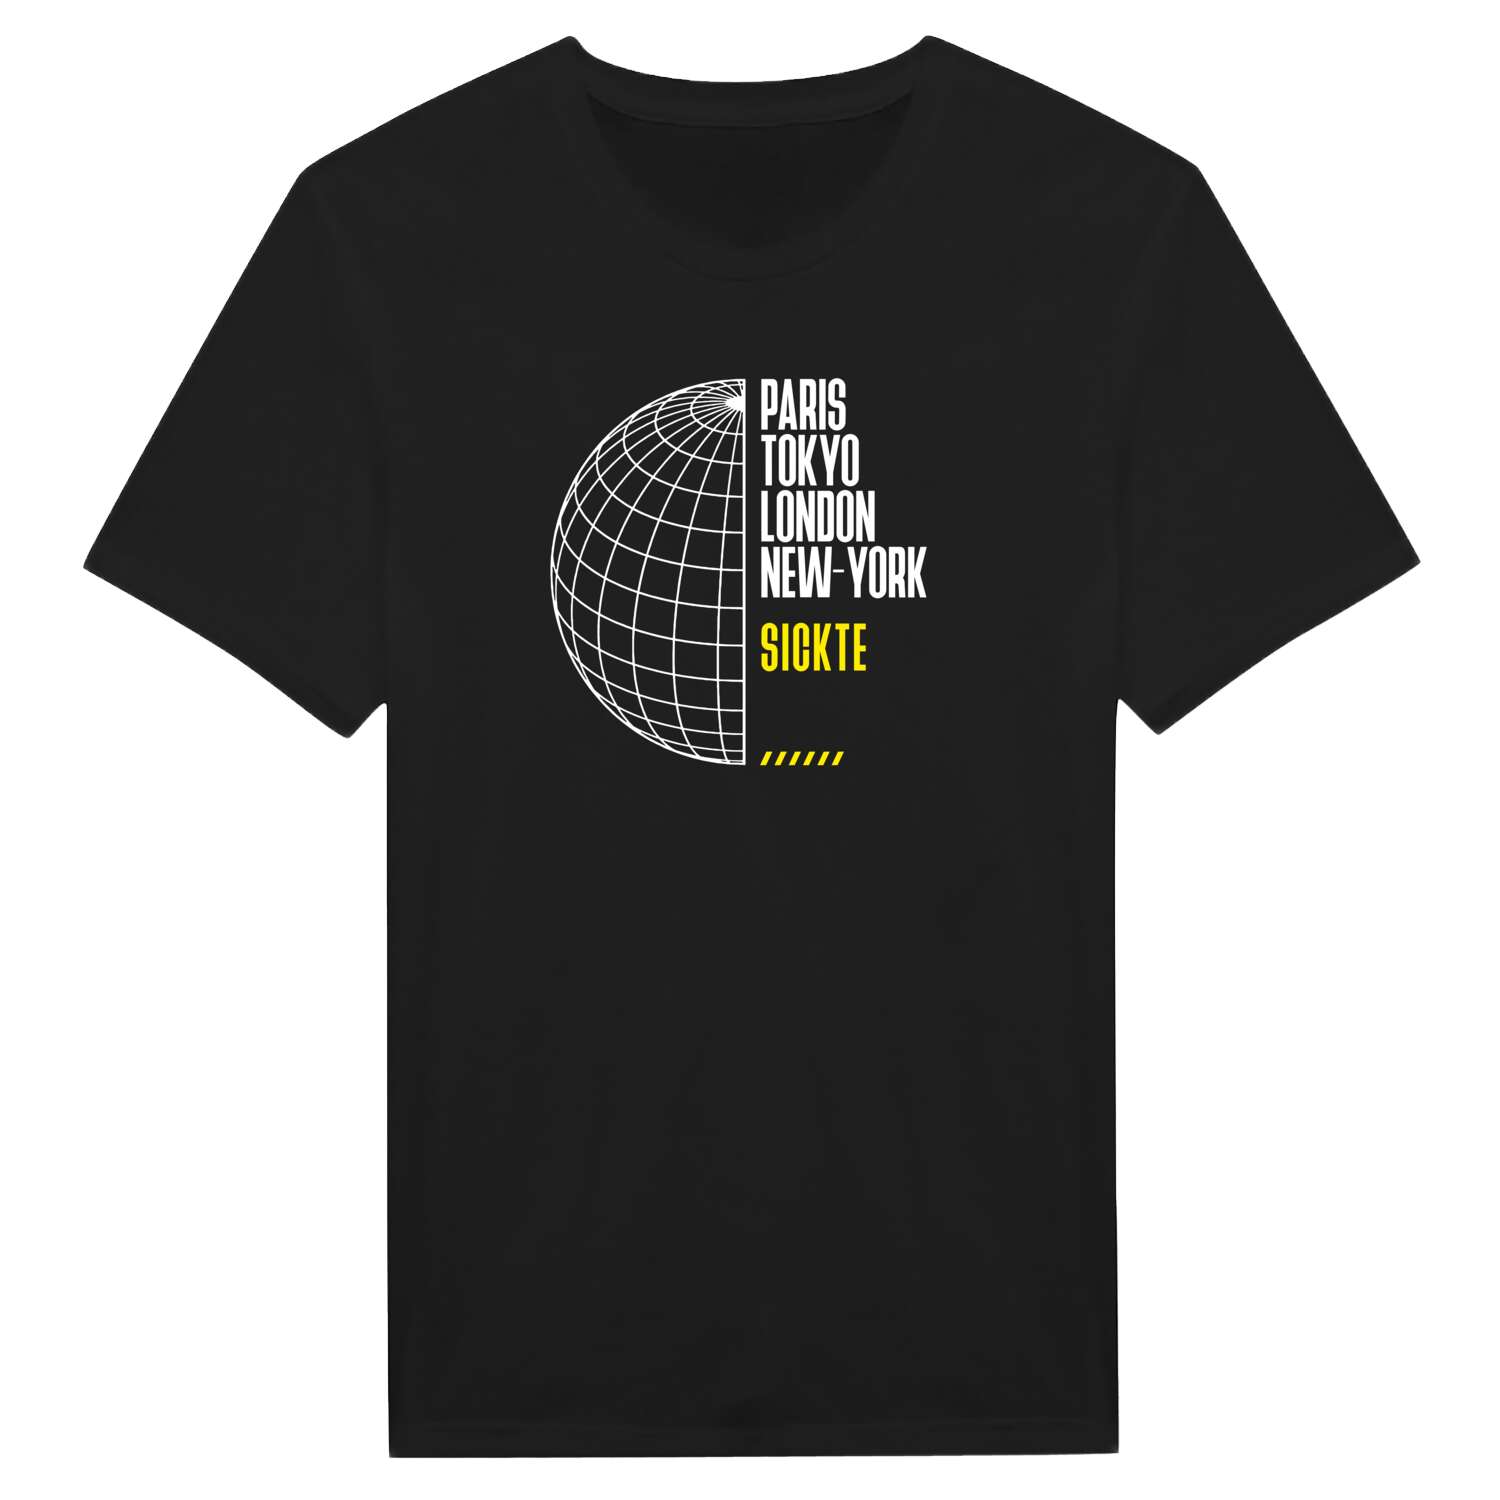 Sickte T-Shirt »Paris Tokyo London«